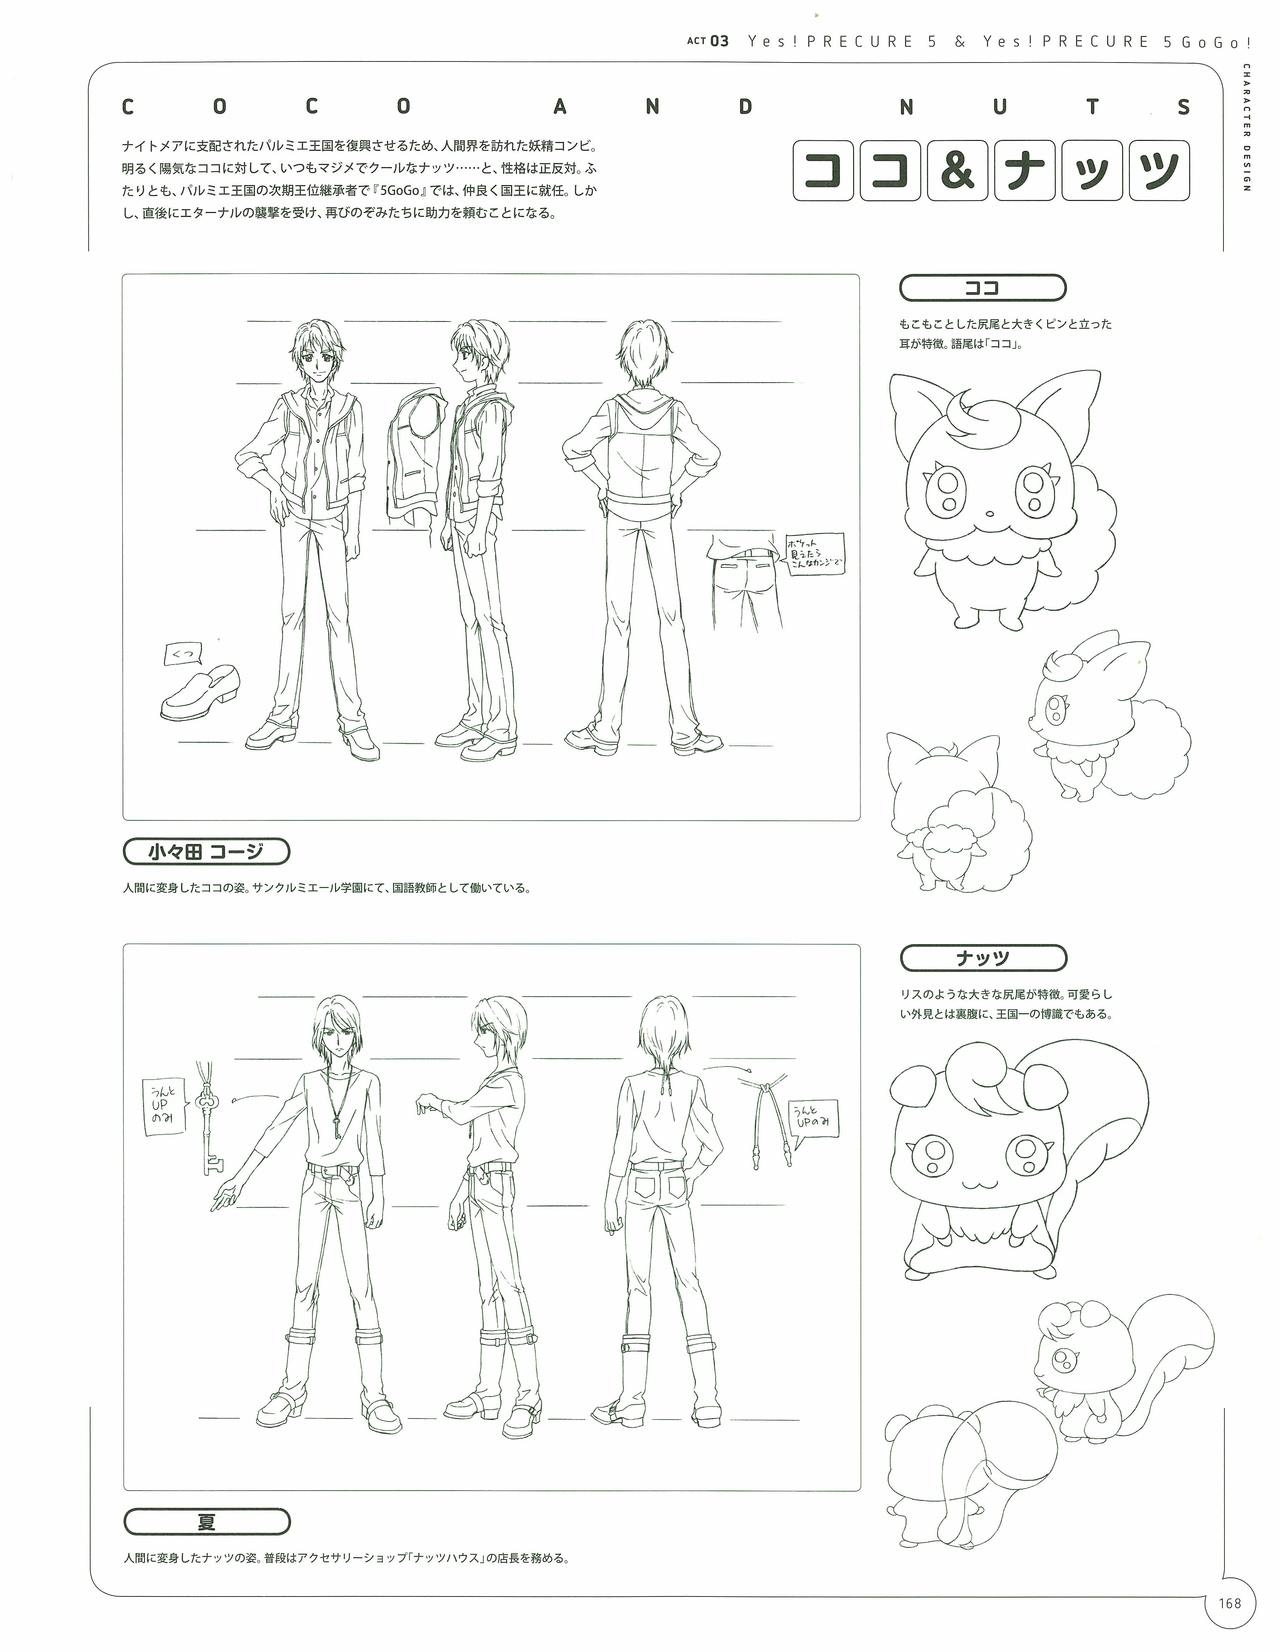 Kawamura Toshie - Toei Animation Precure Works 168